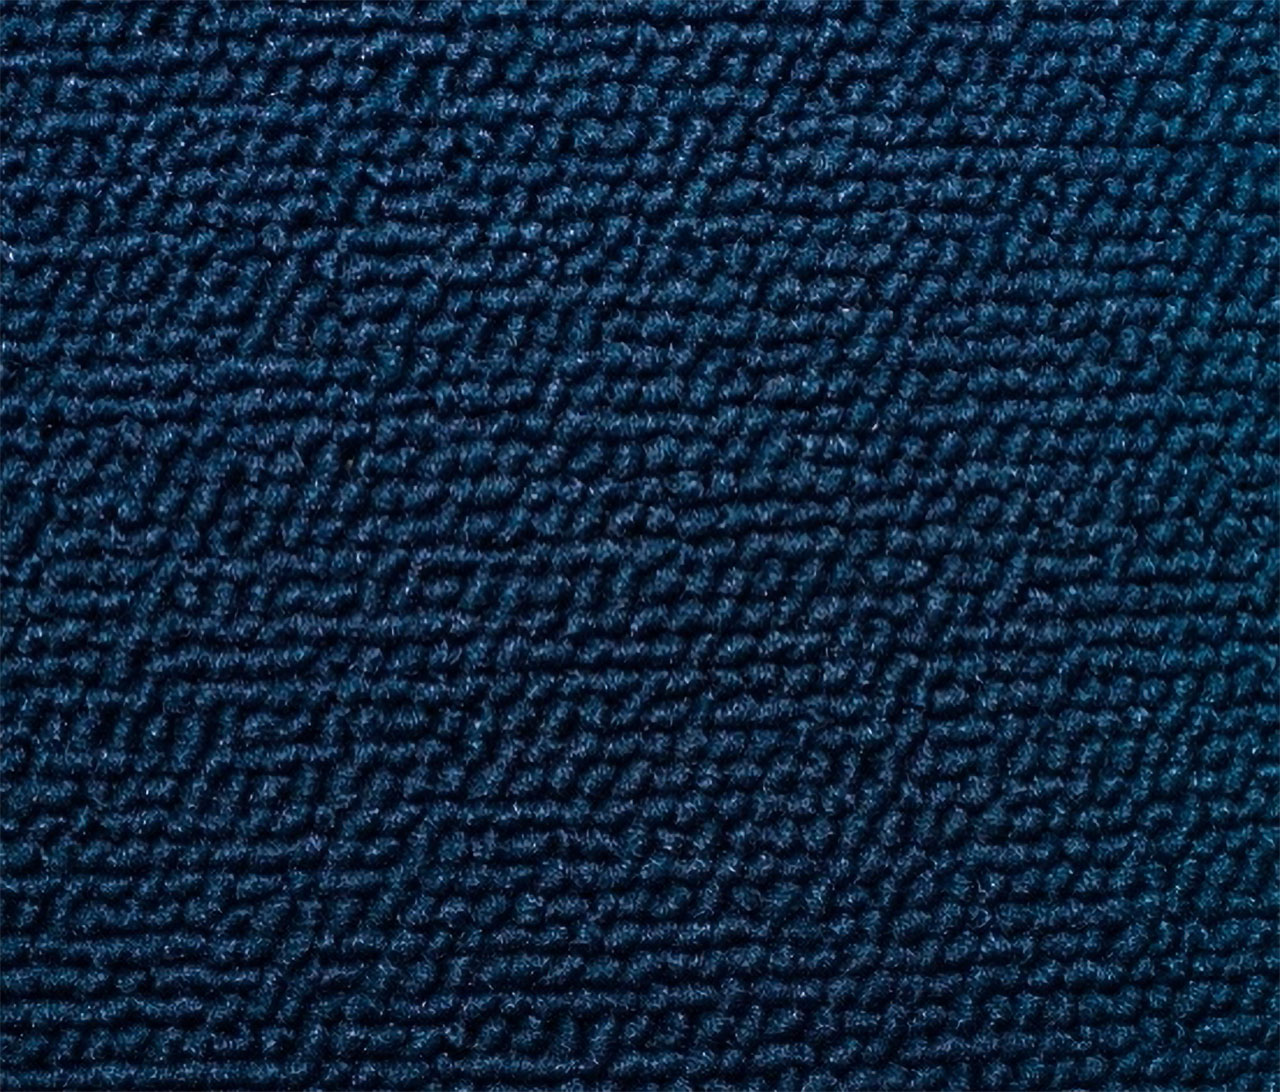 Holden Standard EJ Standard Sedan A95 Columbine Blue Carpet (Image 1 of 1)